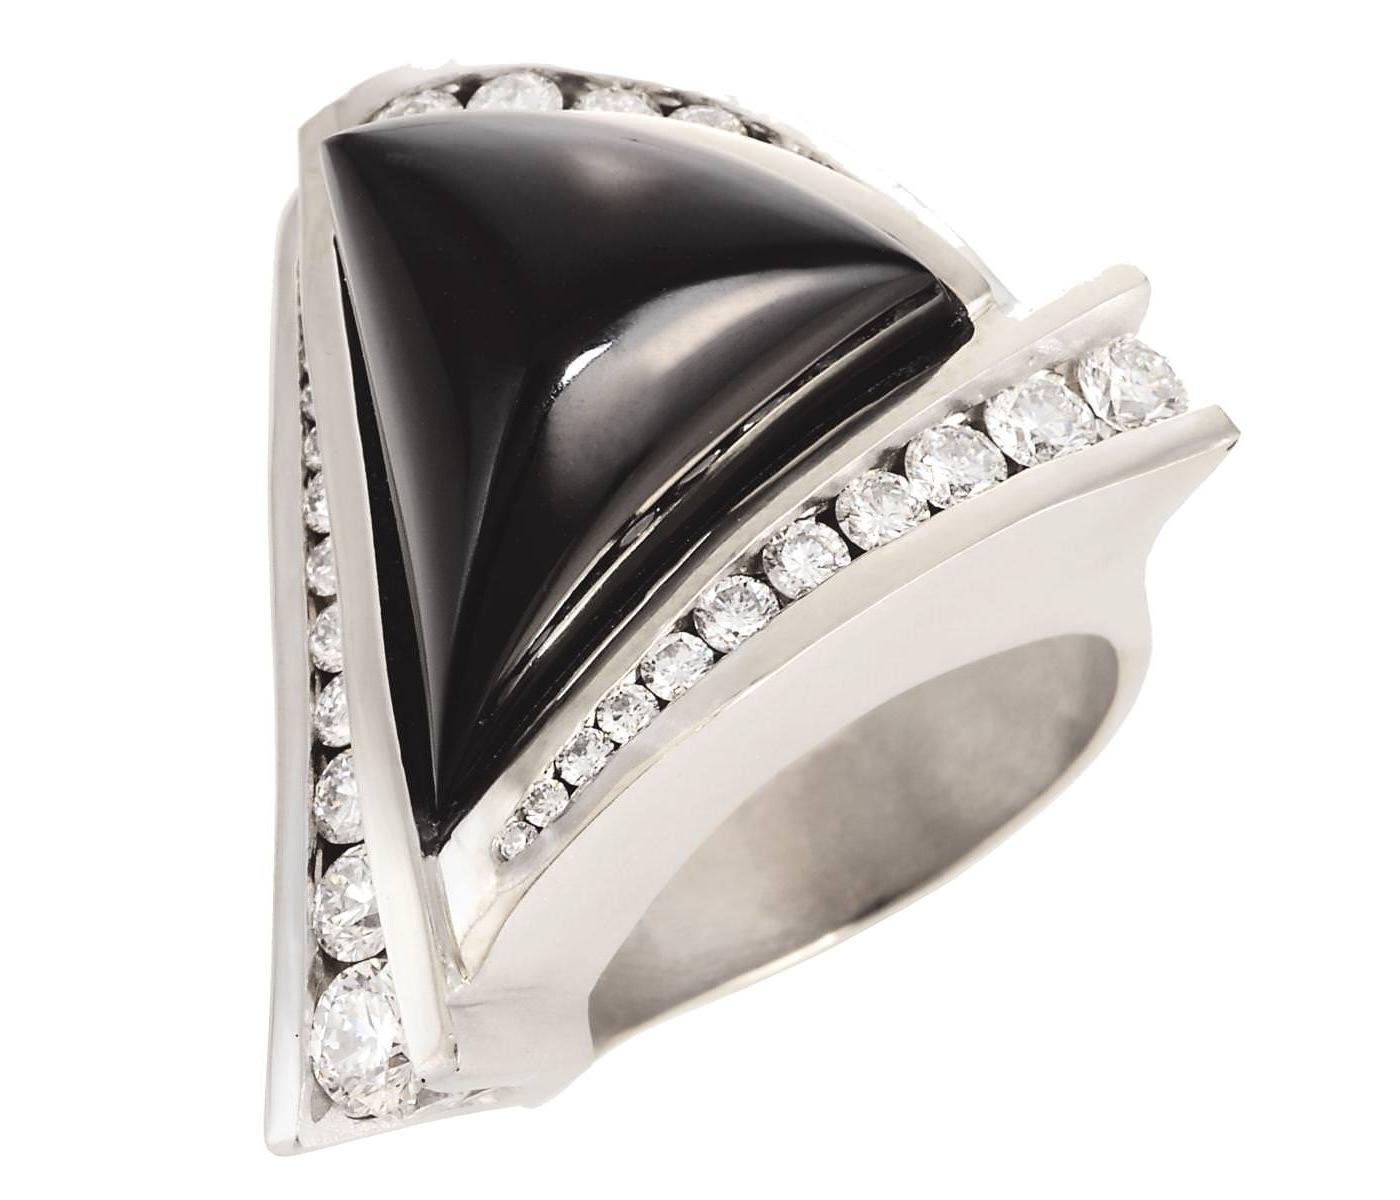 Ring by Gordon Aatlo Designs